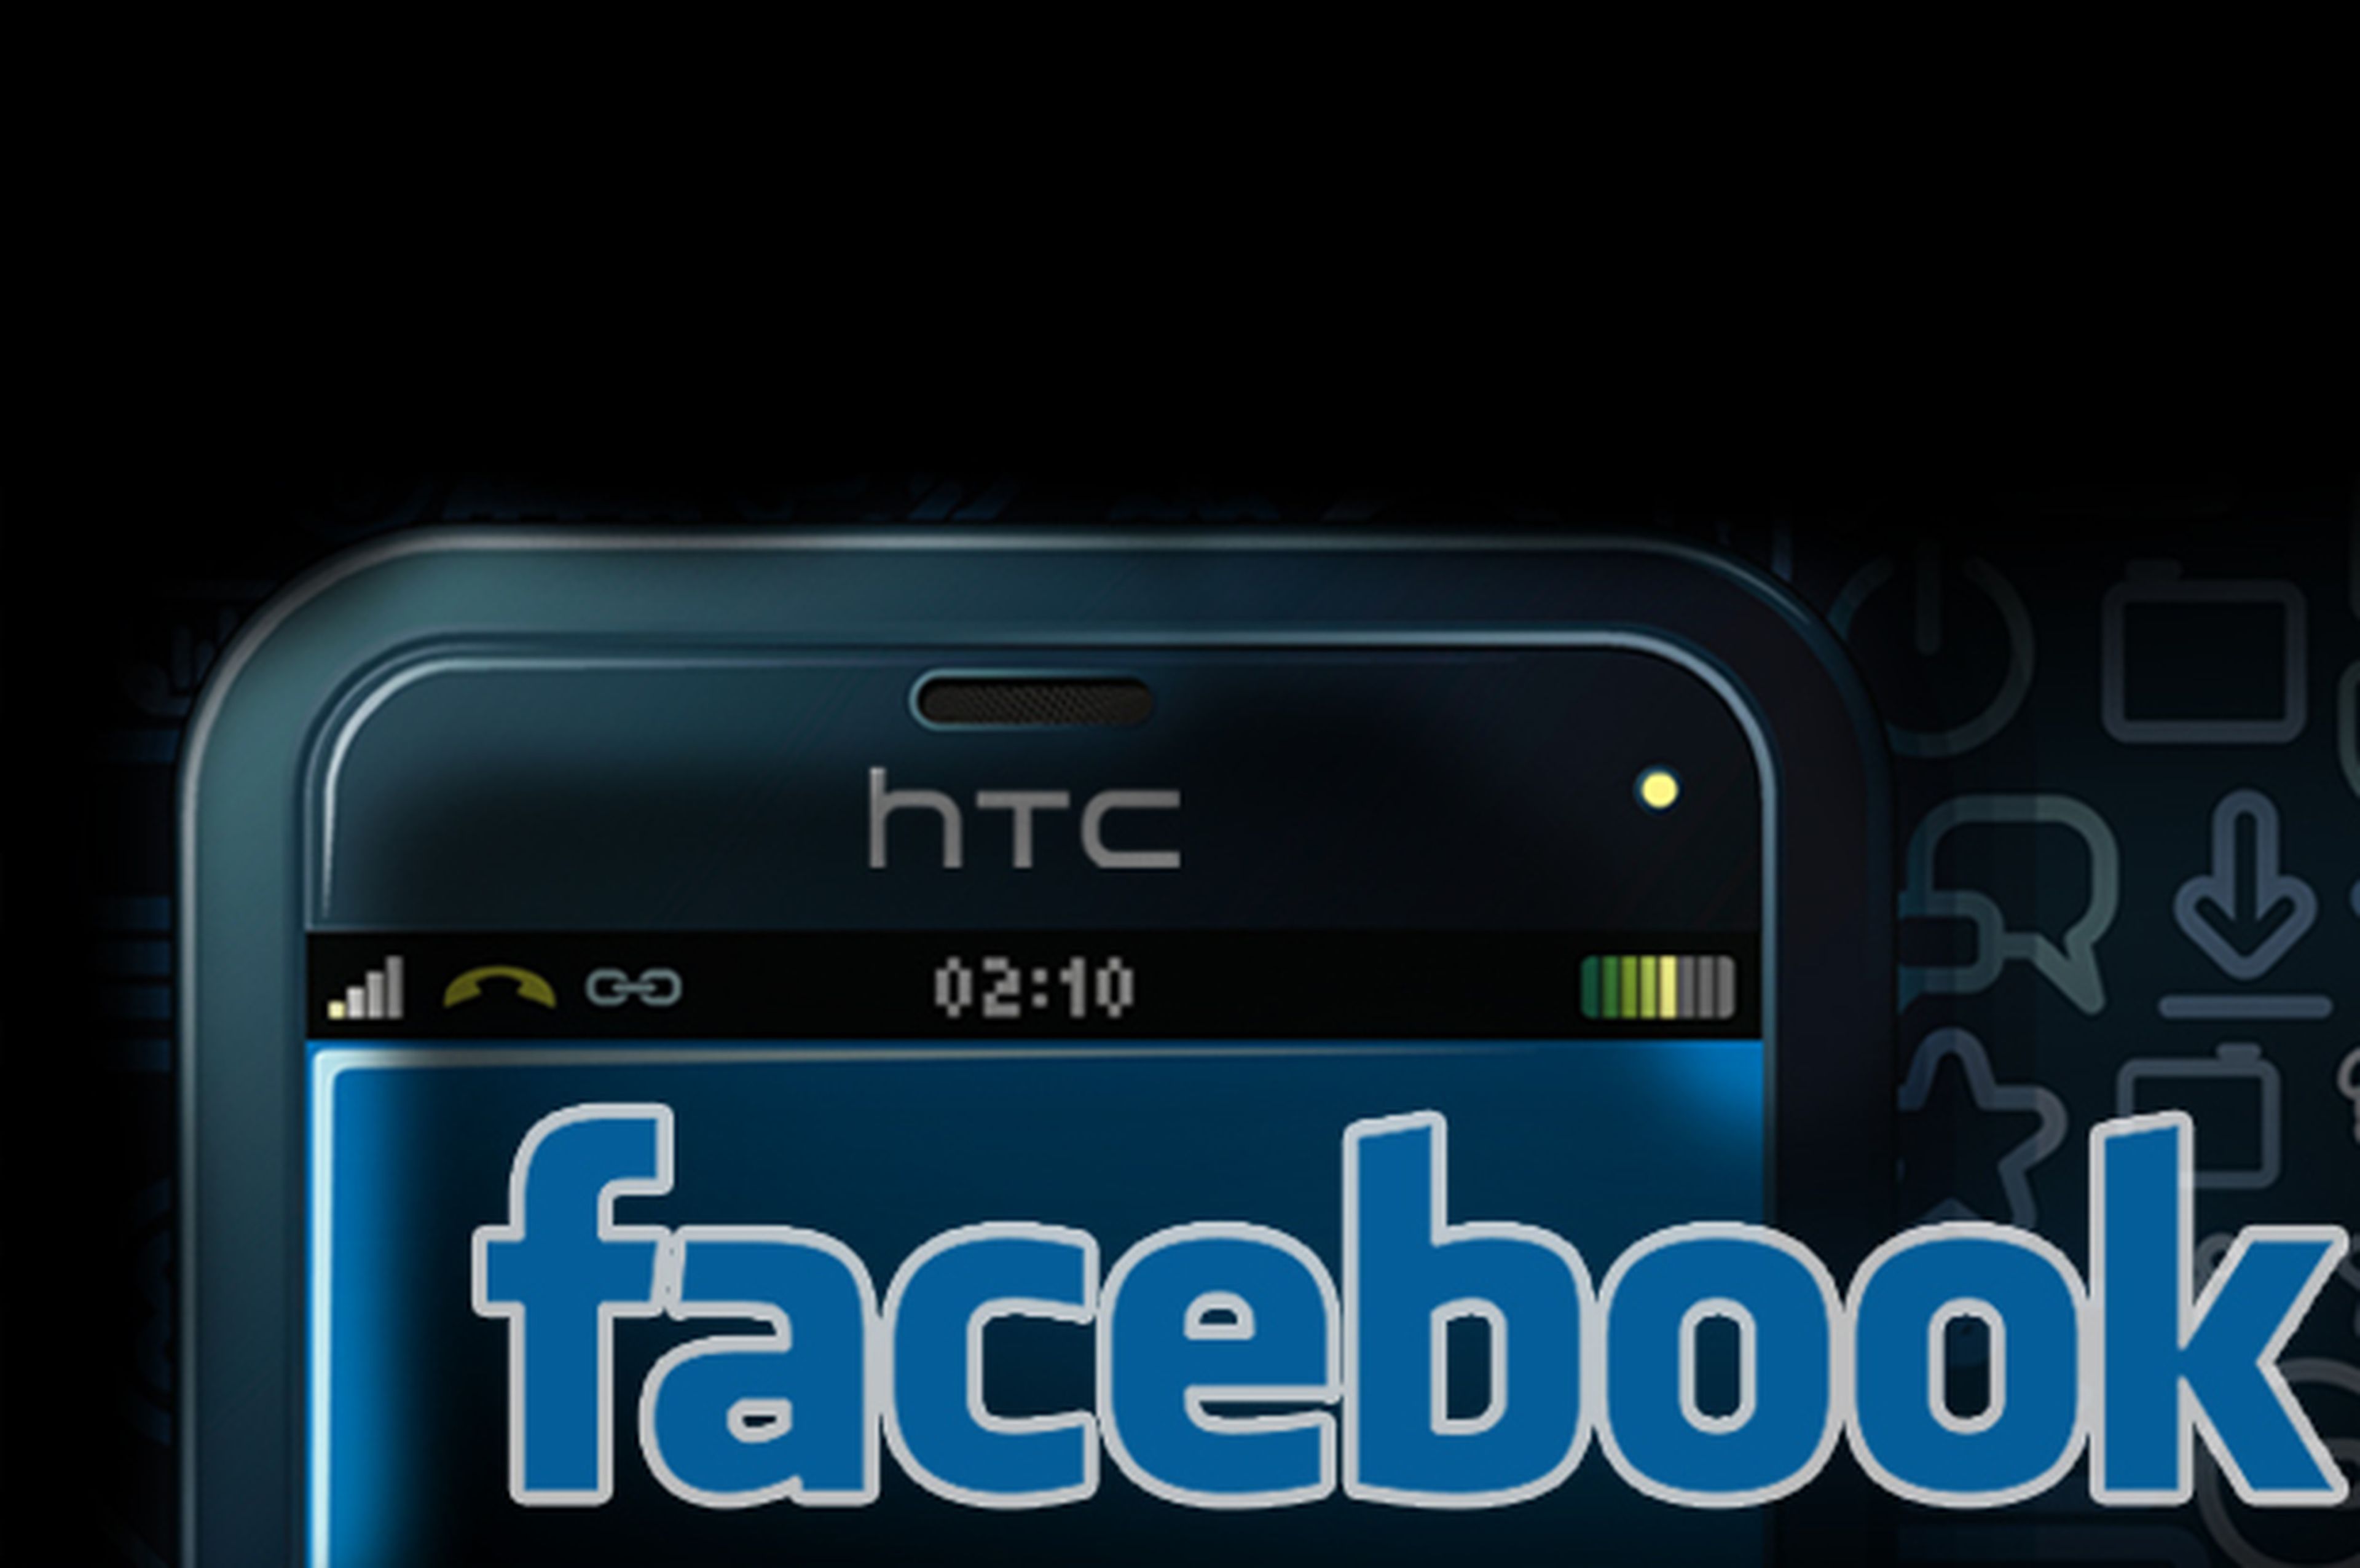 HTC Facebook Phone